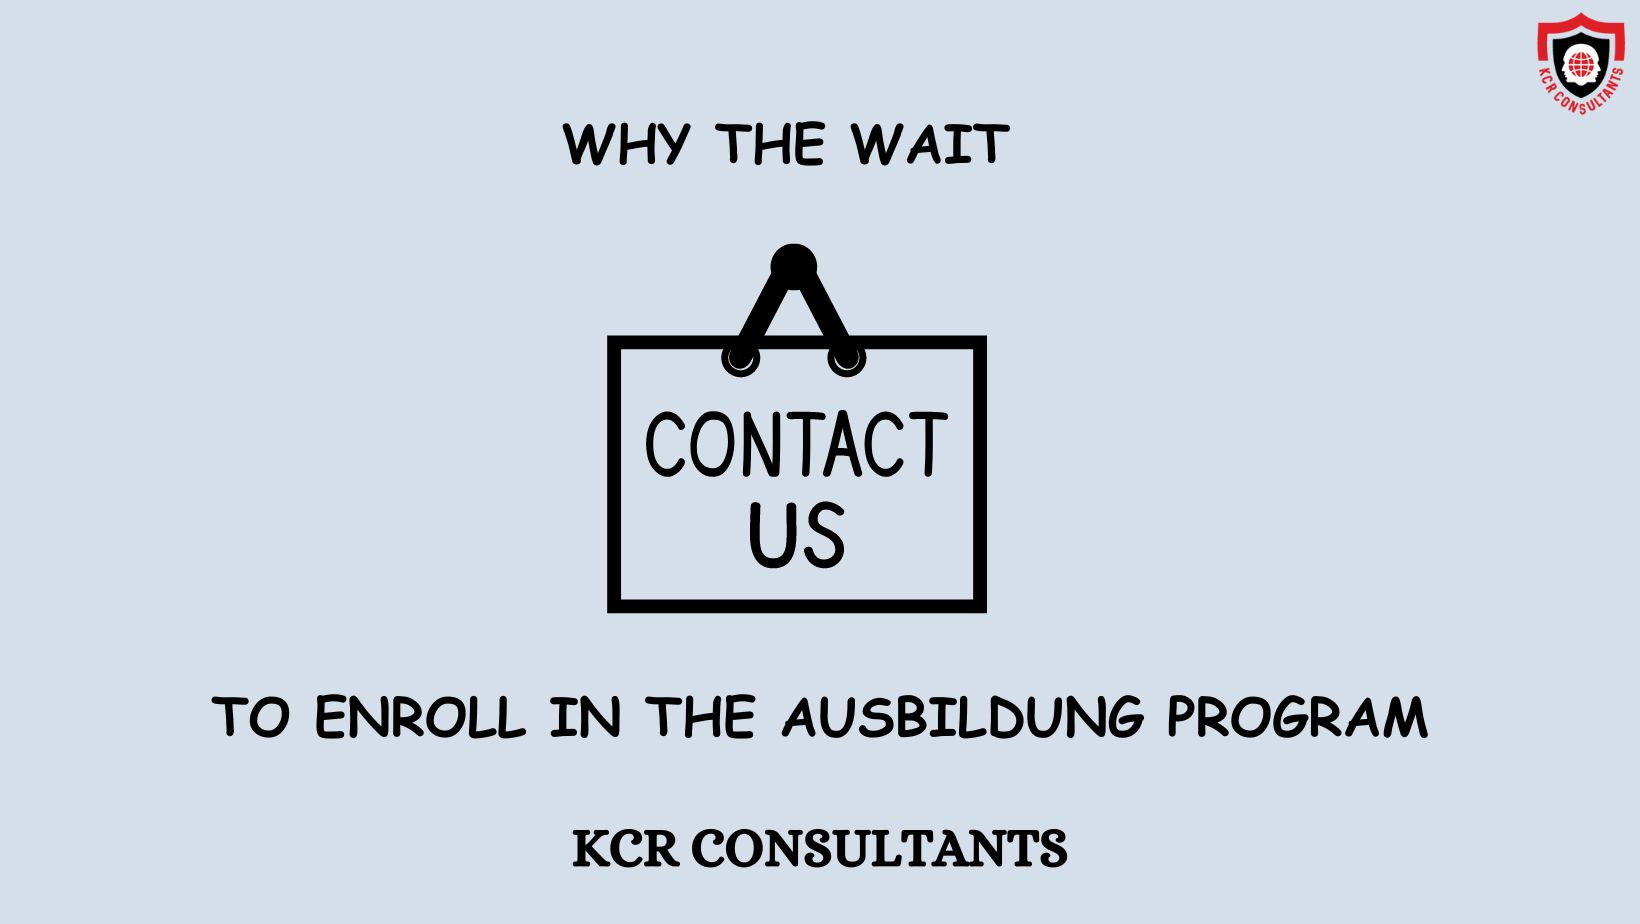 Ausbildung in Germany - Contact us - KCR CONSULTANTS